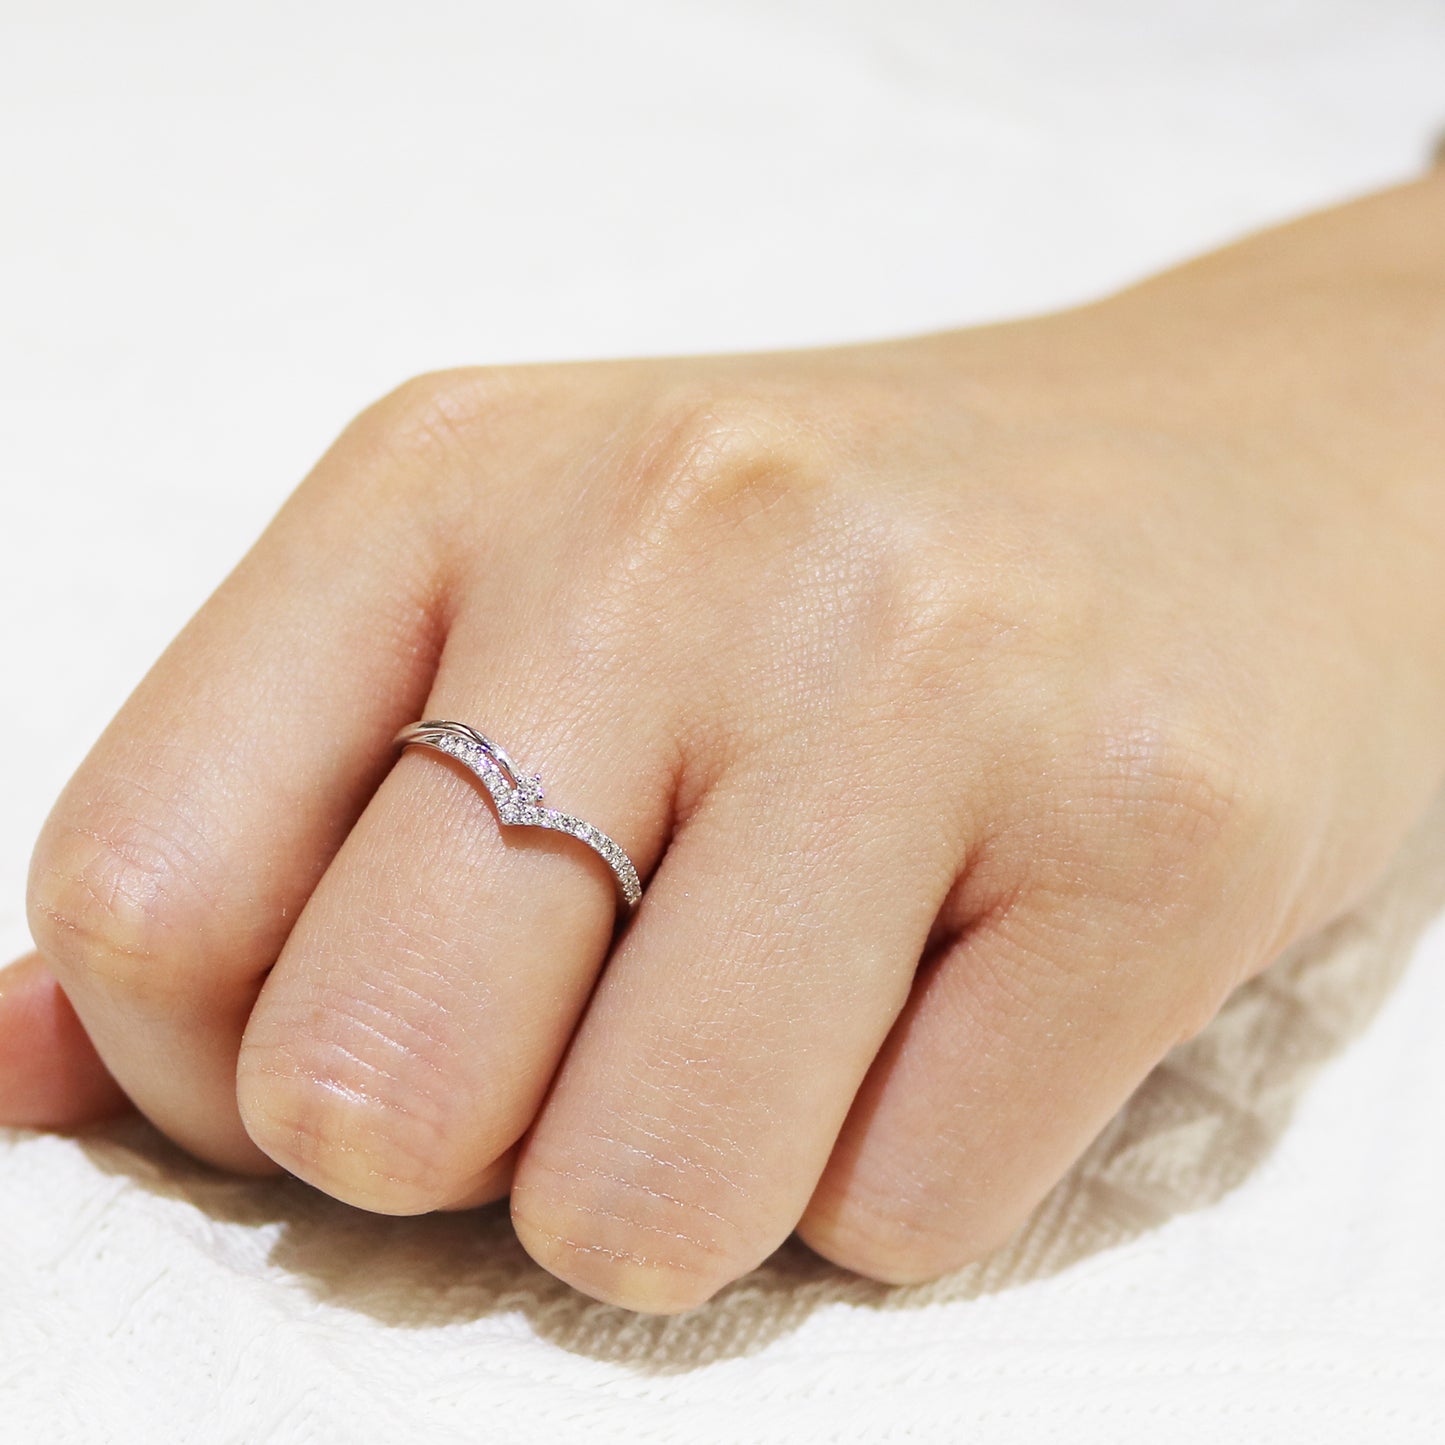 18k白金V形鑽石戒指在中指上 18k White Gold V-shaped Diamond Ring on middle finger